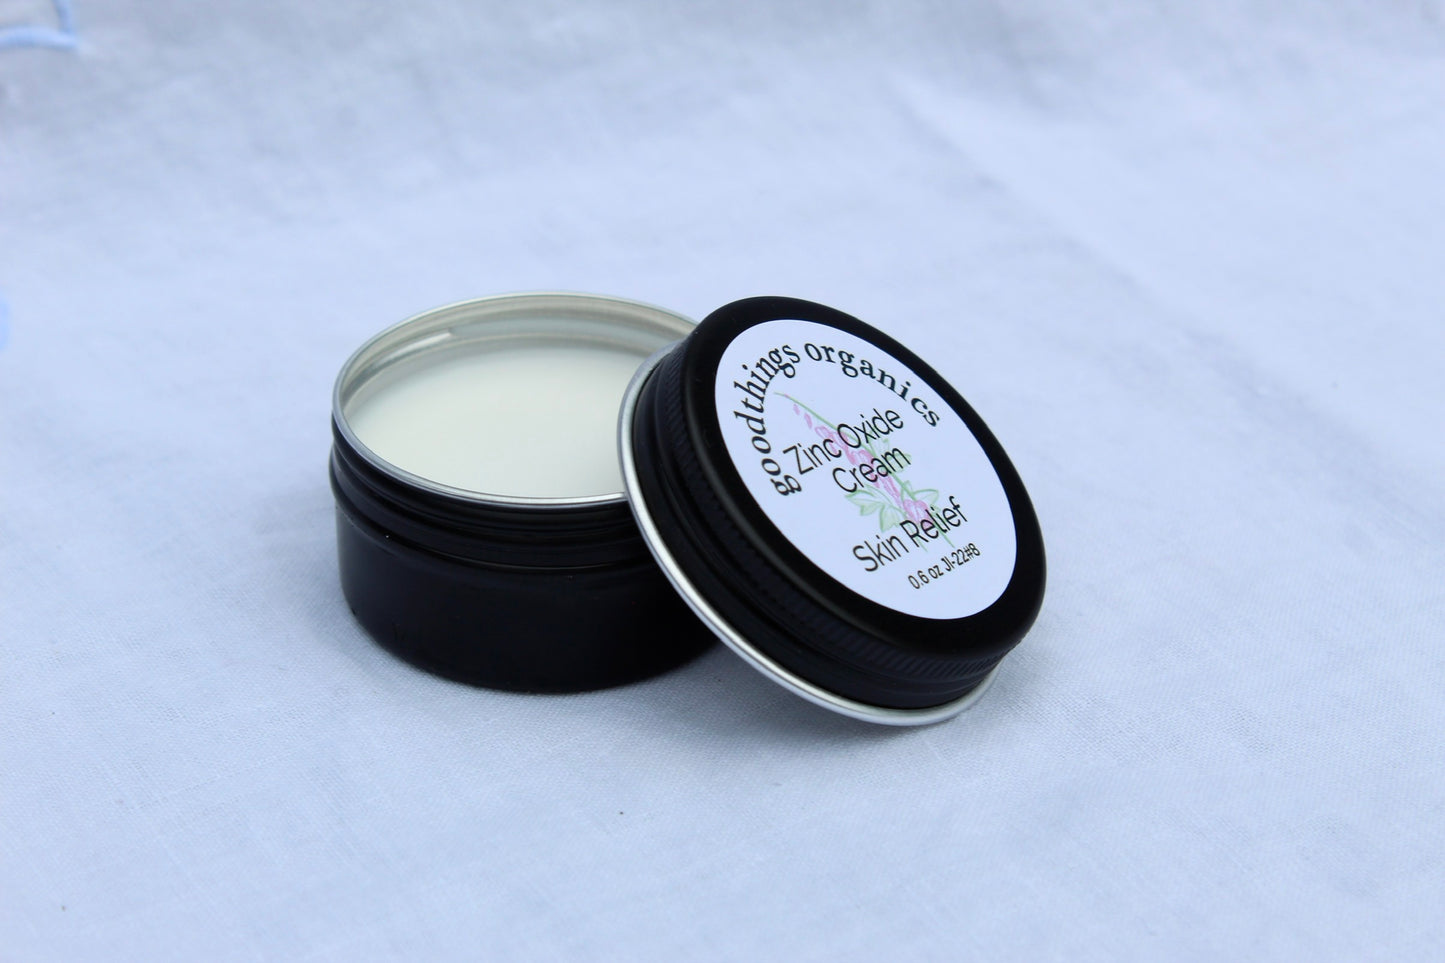 skin relief cream with zinc oxide